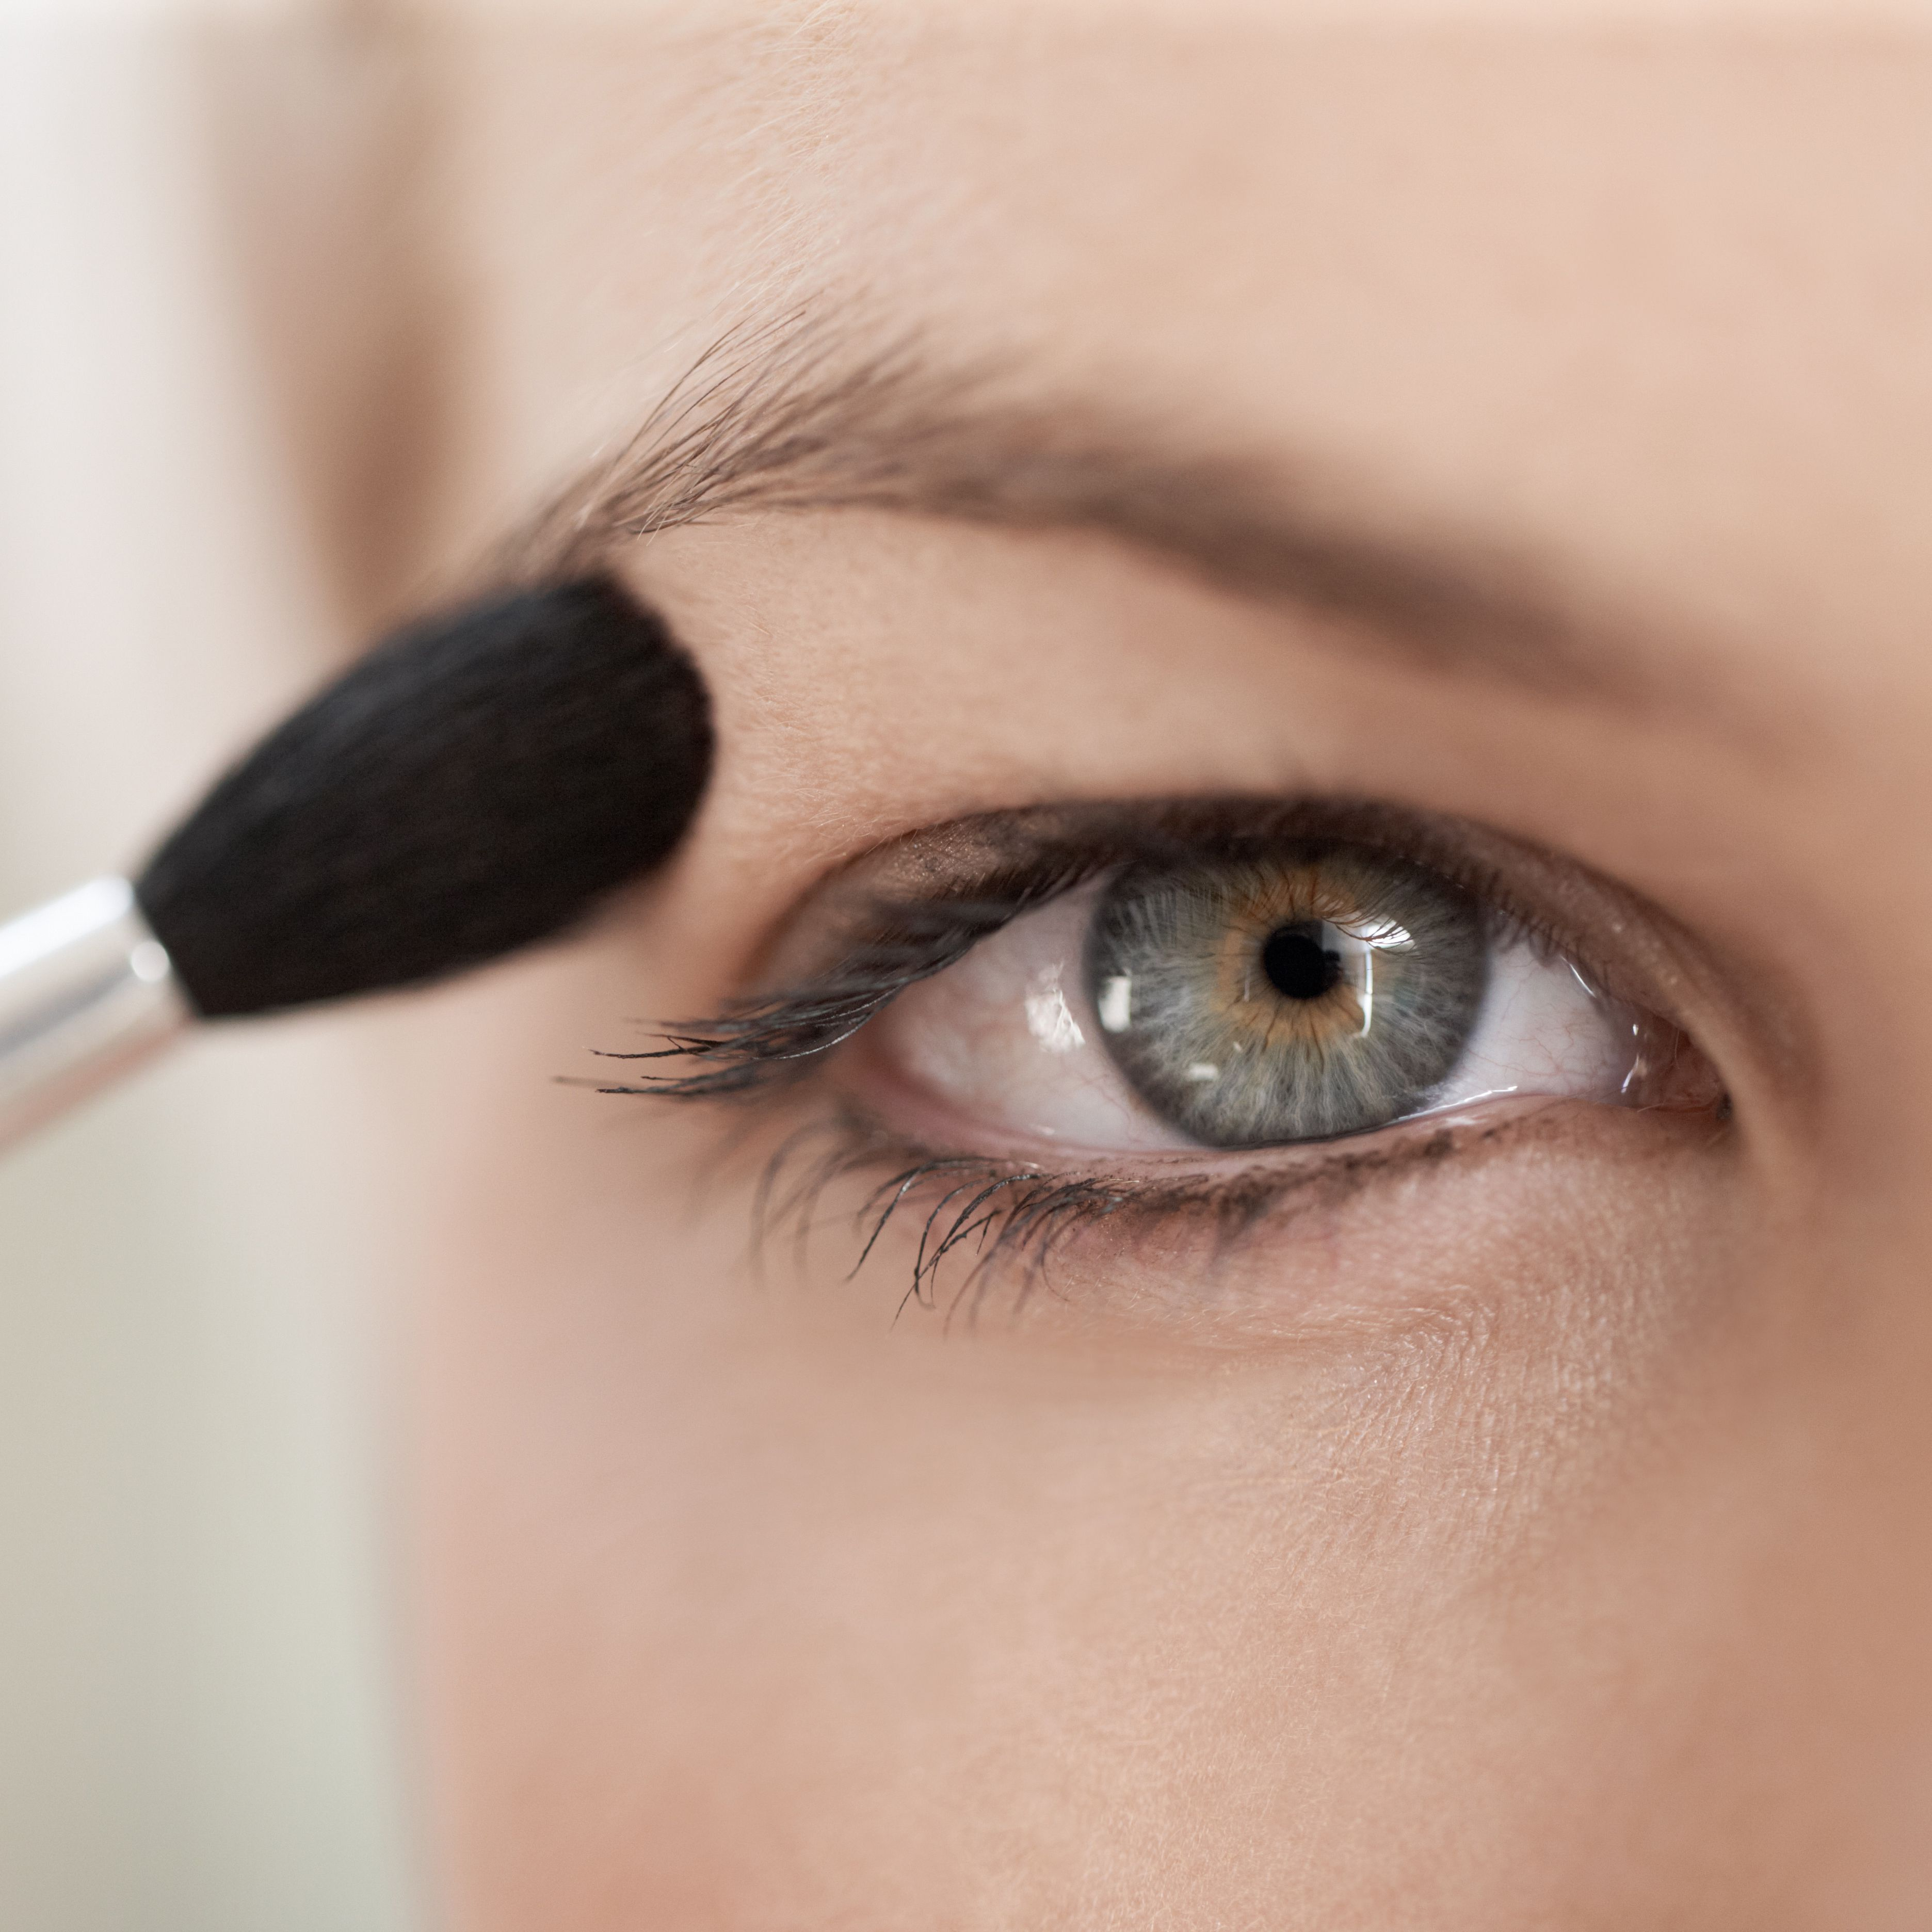 Ball Eye Makeup Makeup Tricks For Hooded Eyes Hooded Eyes Makeup Tips And Tricks